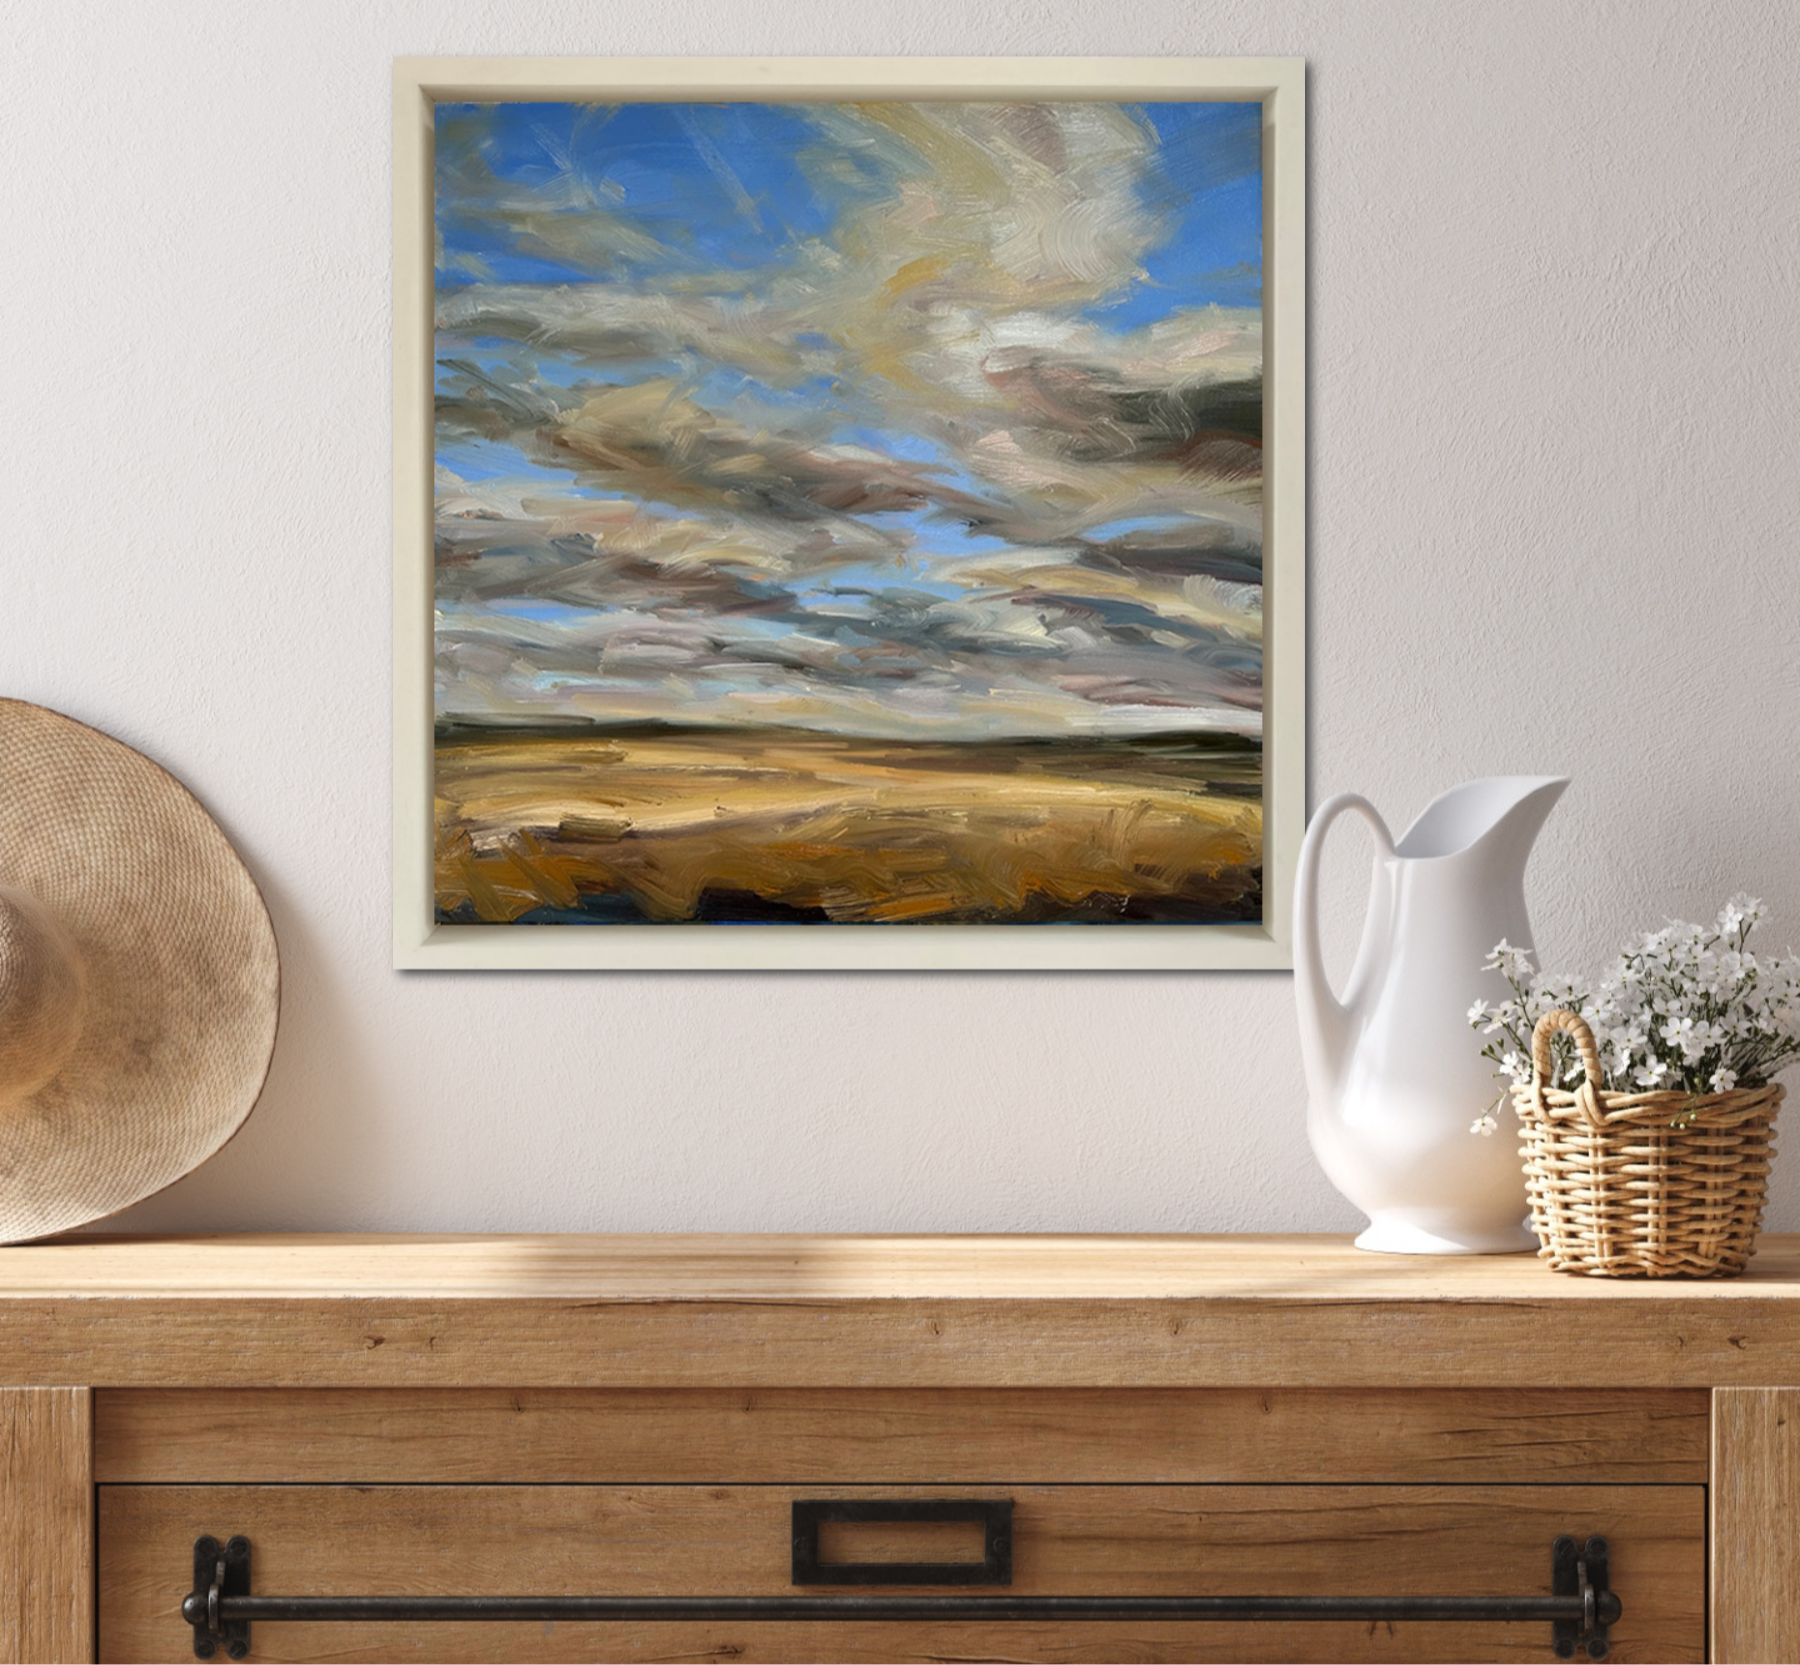 Bring Me Sunshine Original Oil Landscape Painting In Room Setting1